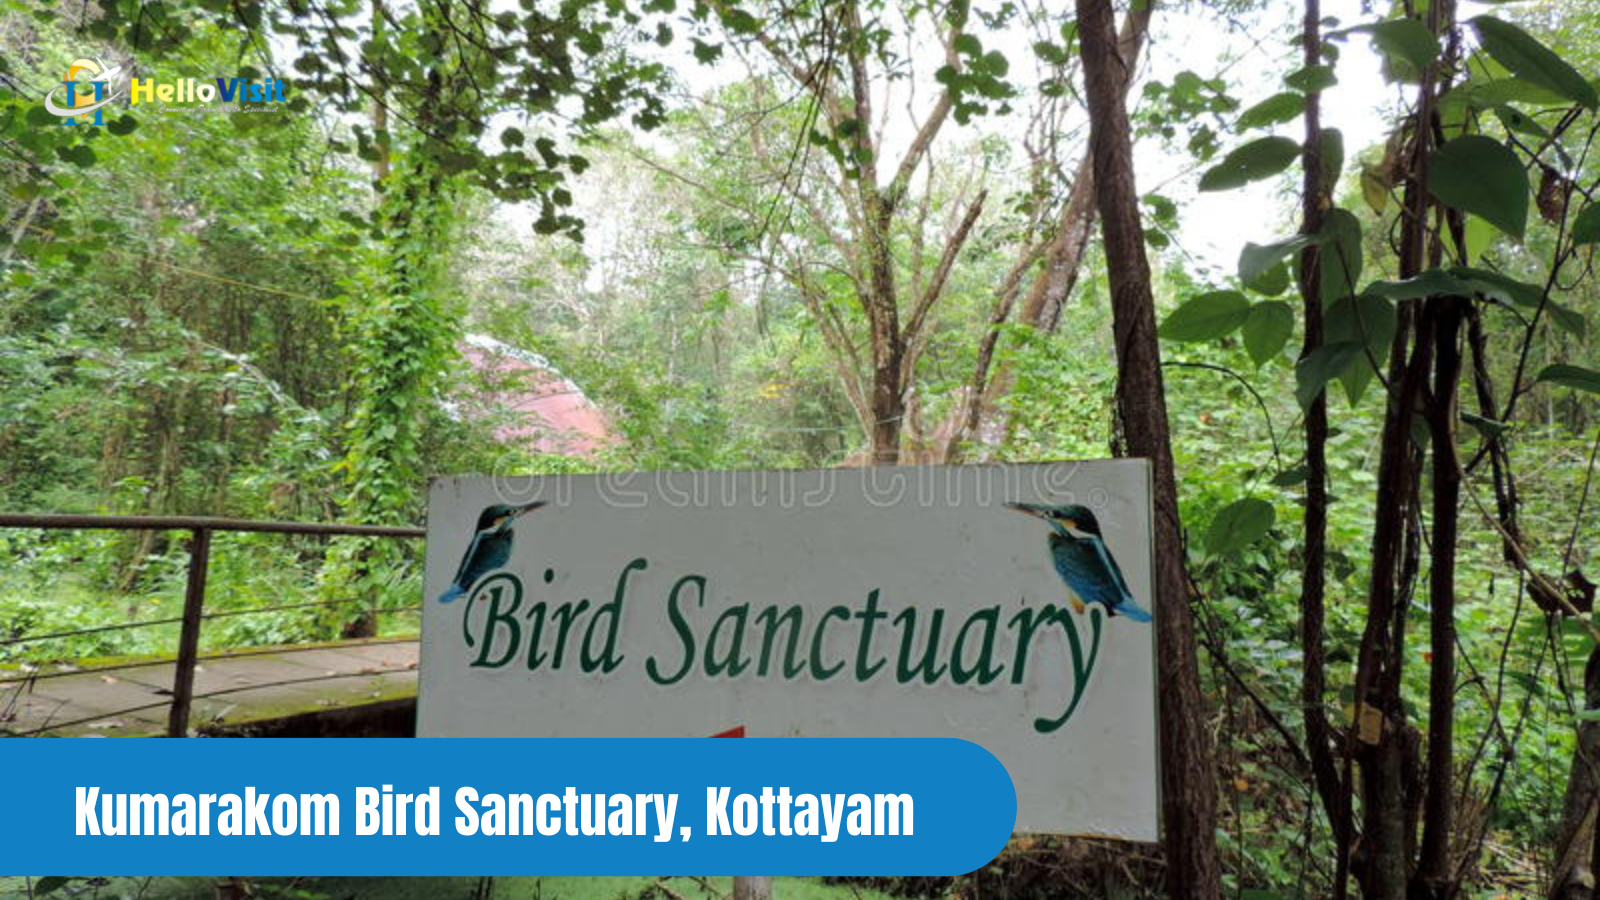 Kumarakom Bird Sanctuary, Kottayam